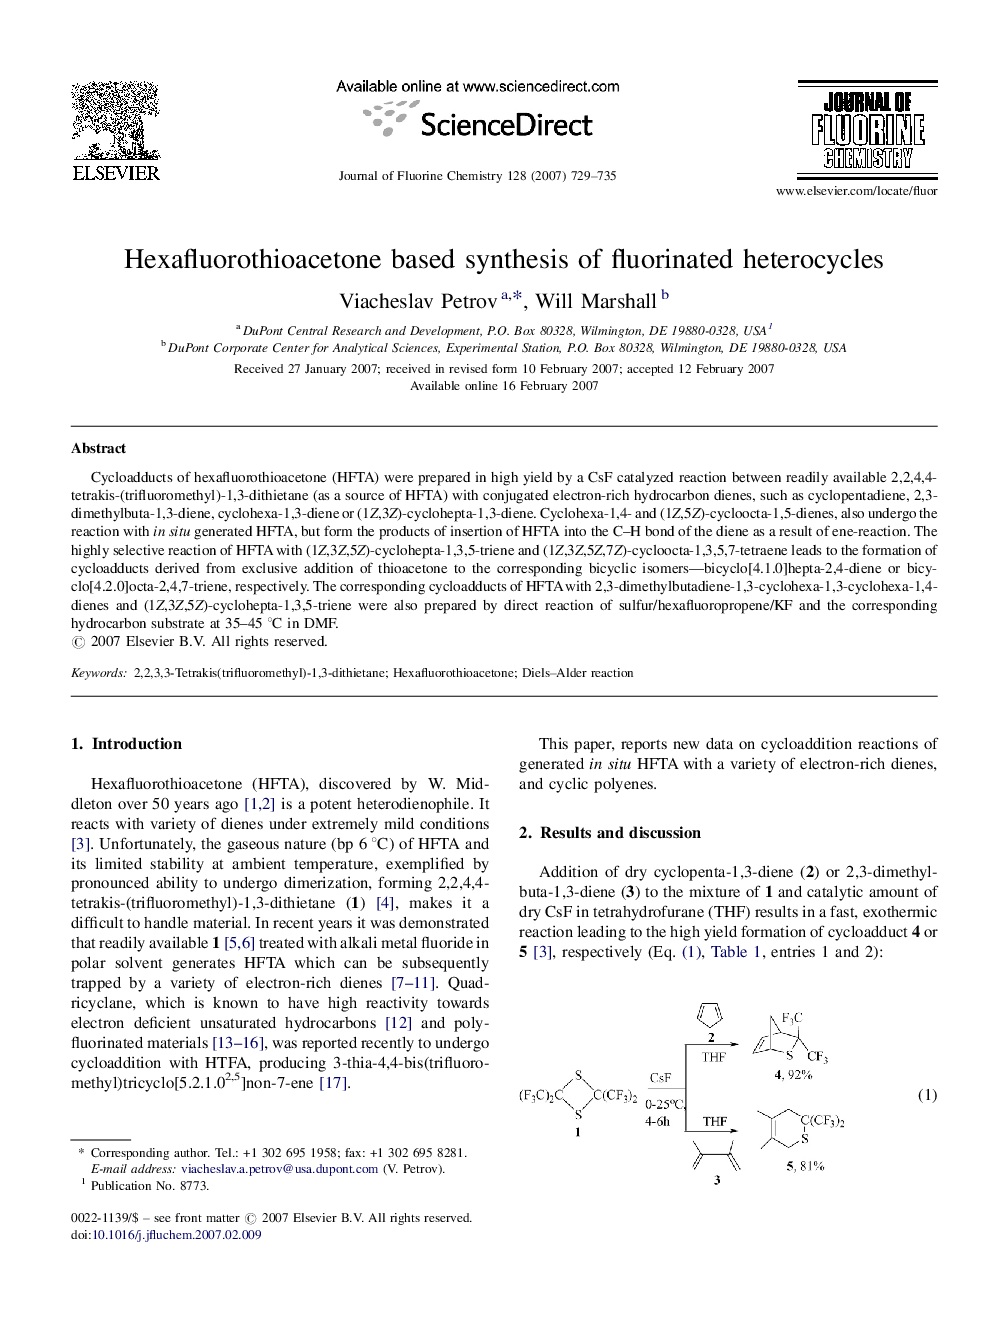 Hexafluorothioacetone based synthesis of fluorinated heterocycles